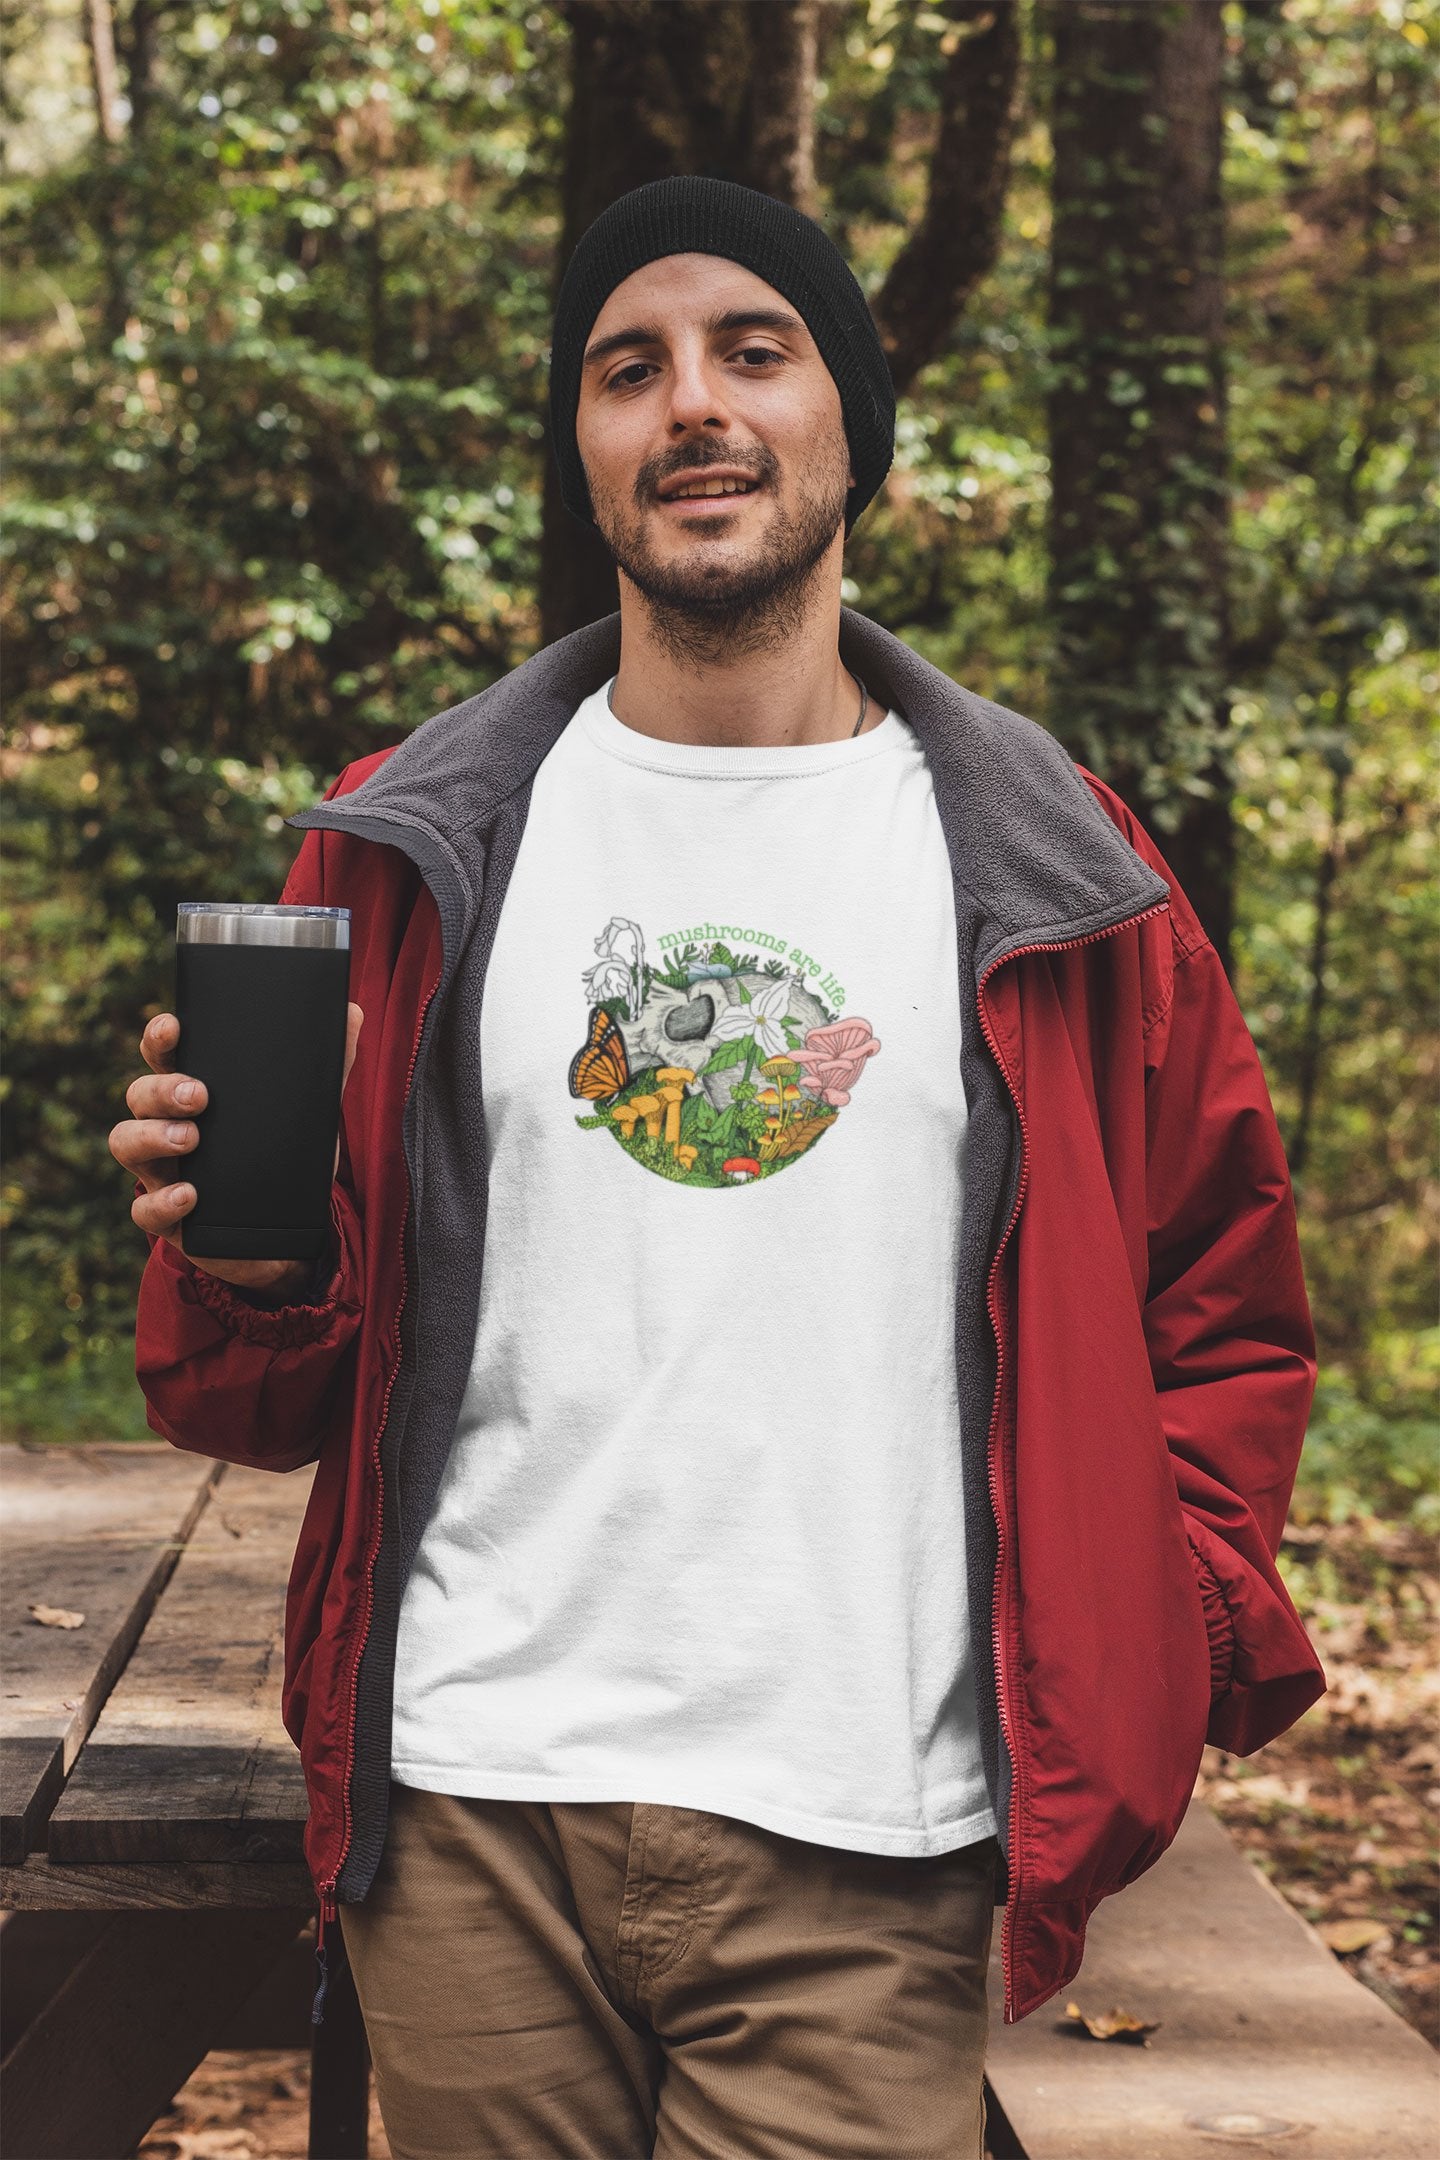 Mushrooms Are Life. T-shirt | Human Skull, Flowers and Fungi | 100% Cotton